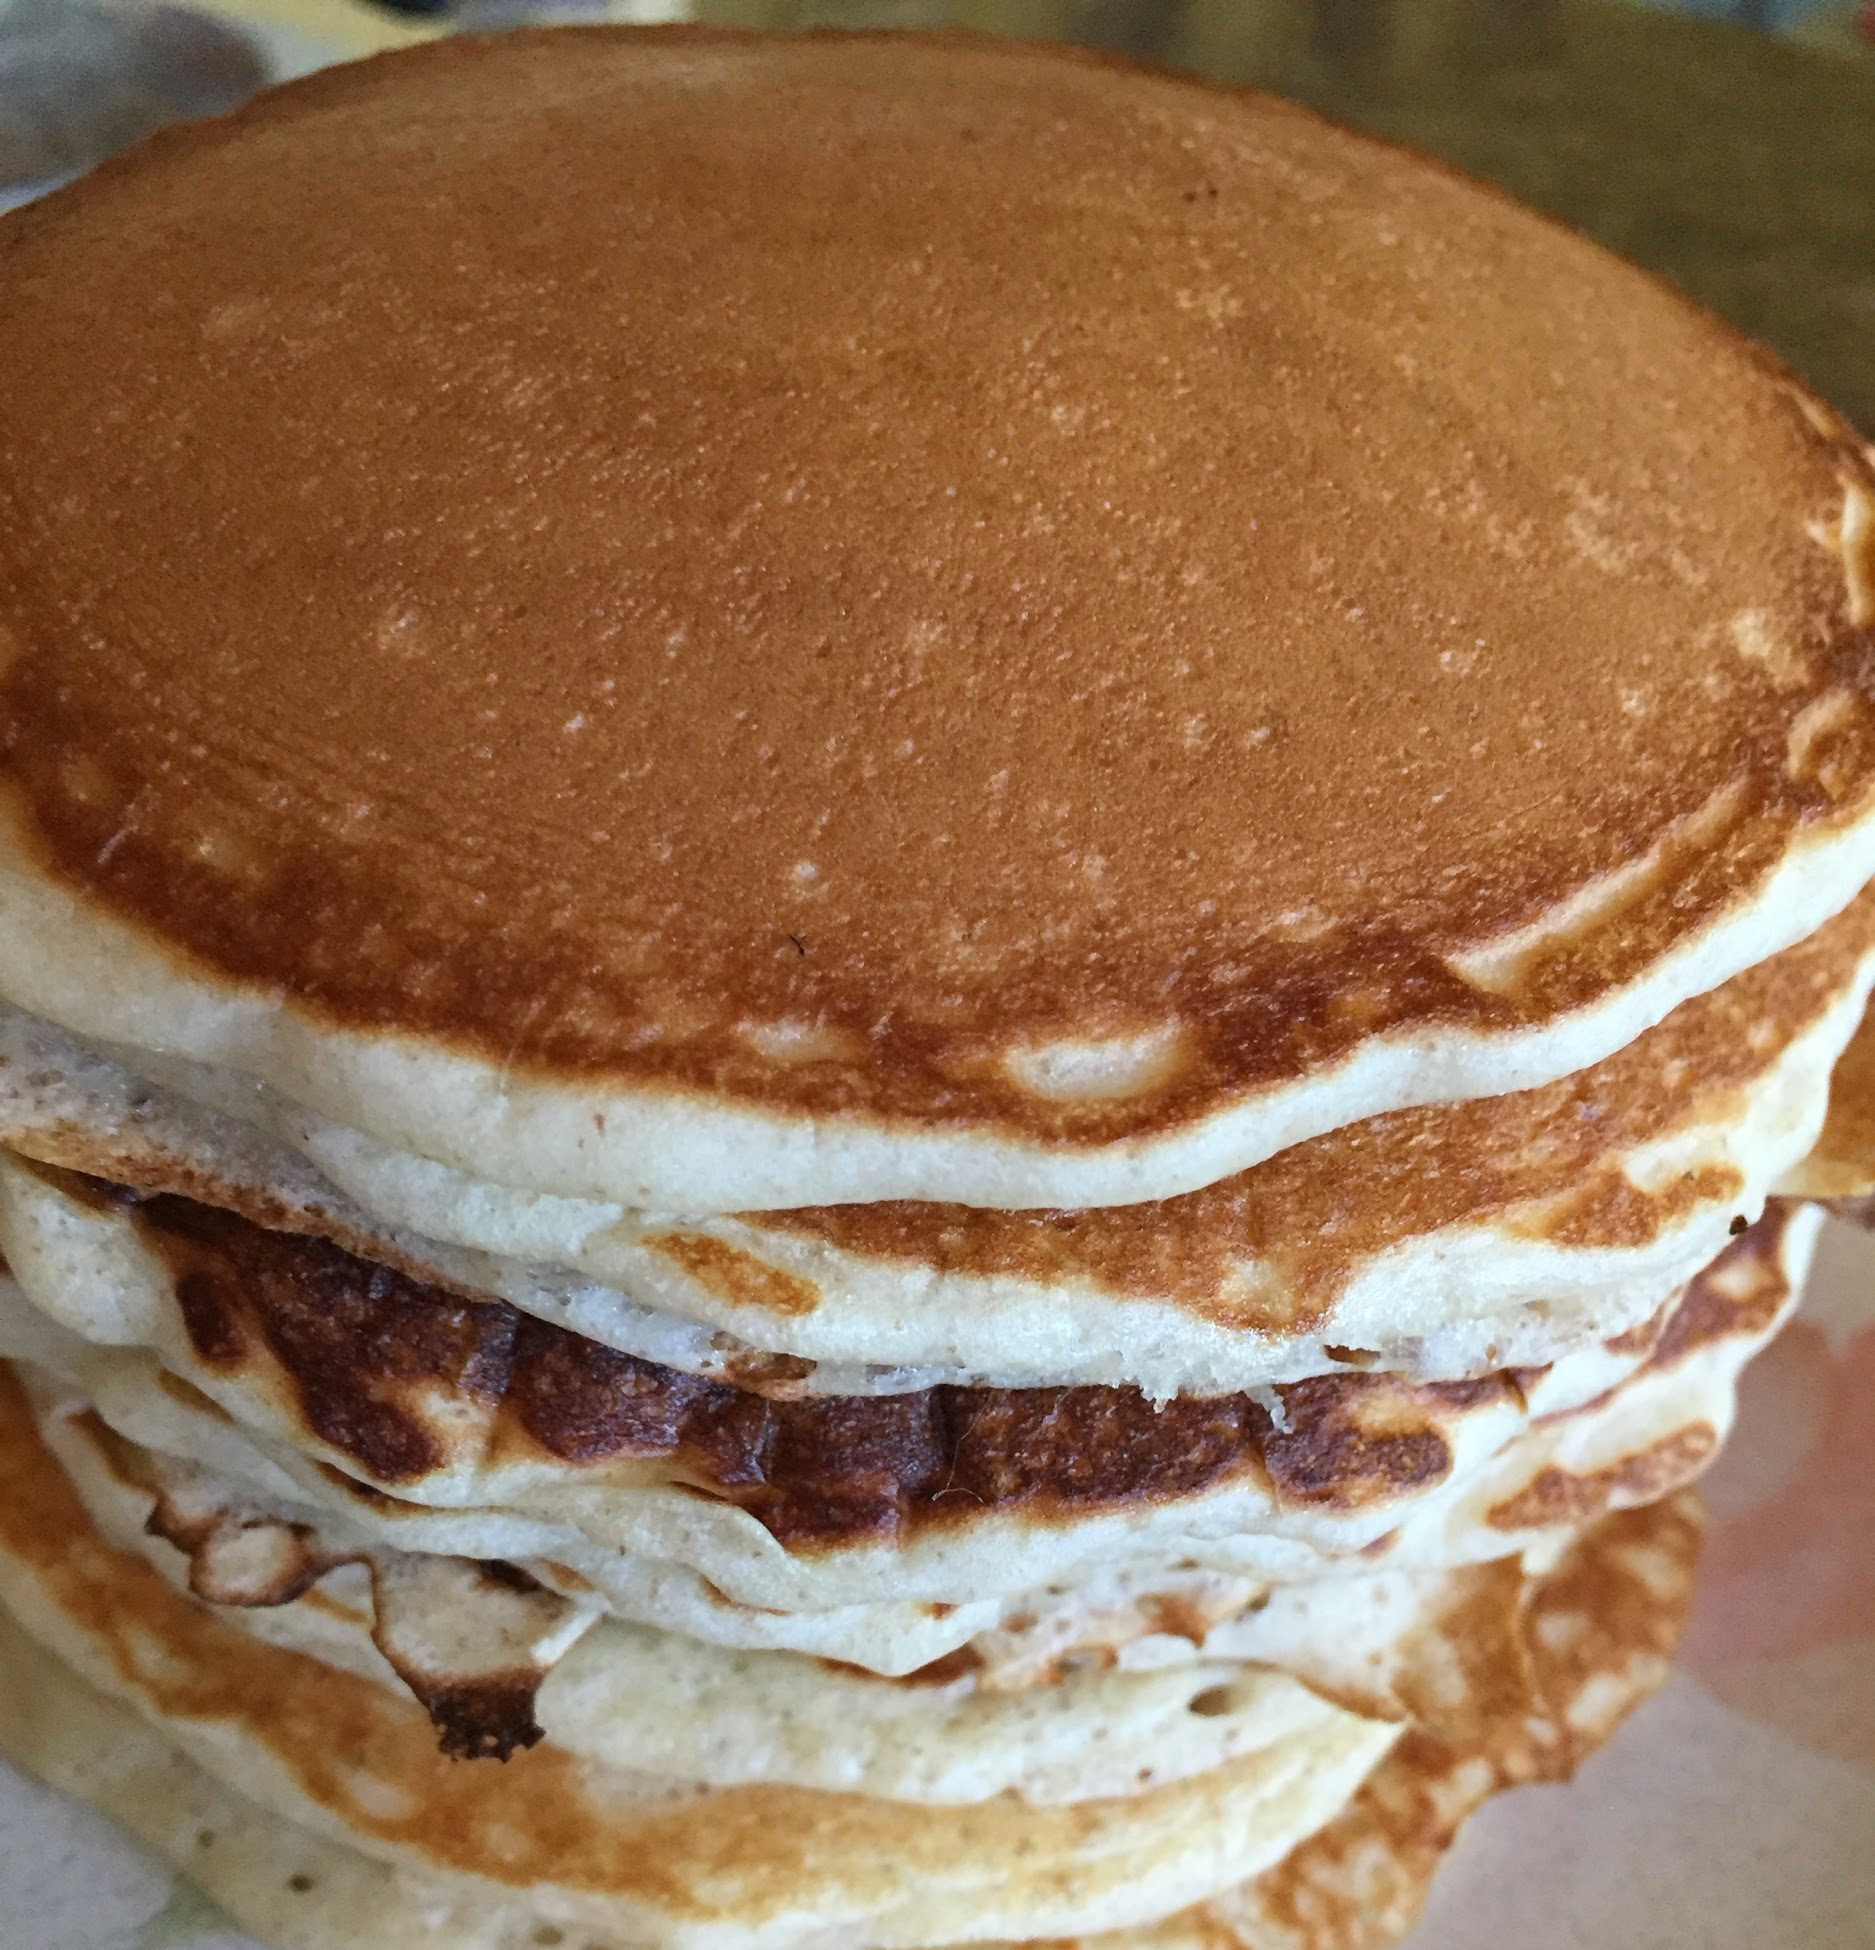 See Sourdough kefir pancakes recipe